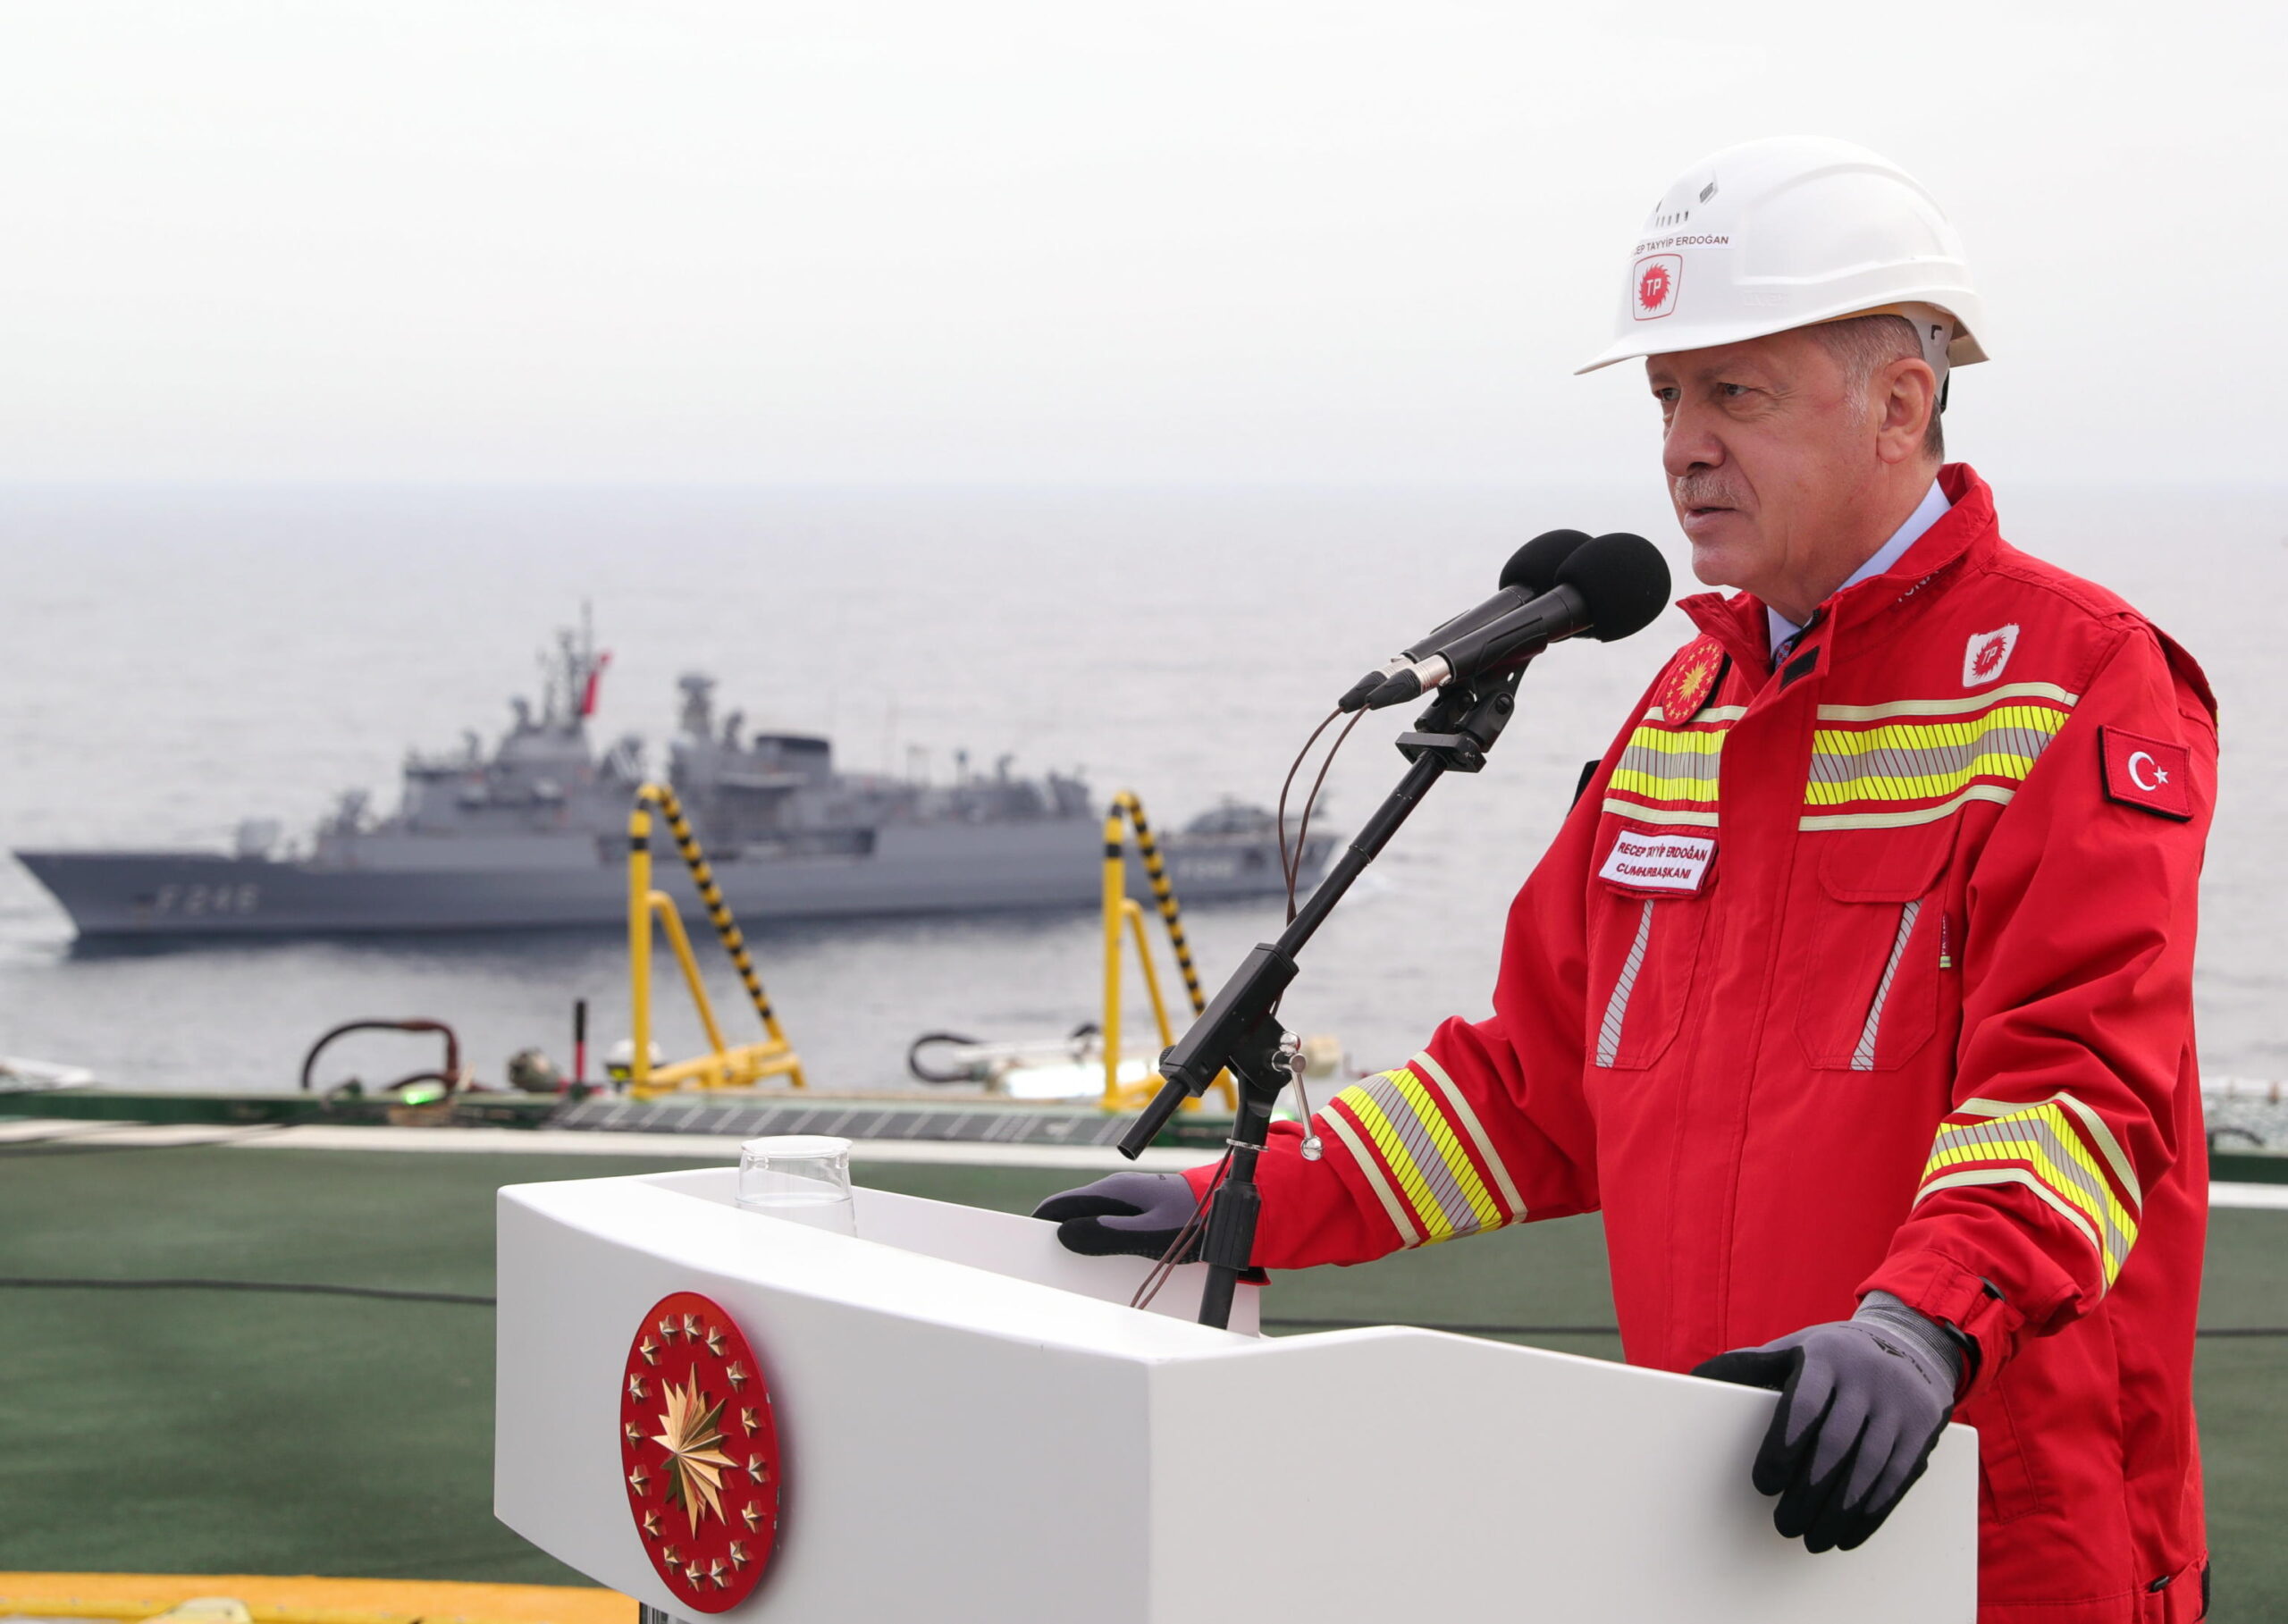 La guerra nel Mar Nero preoccupa Erdogan